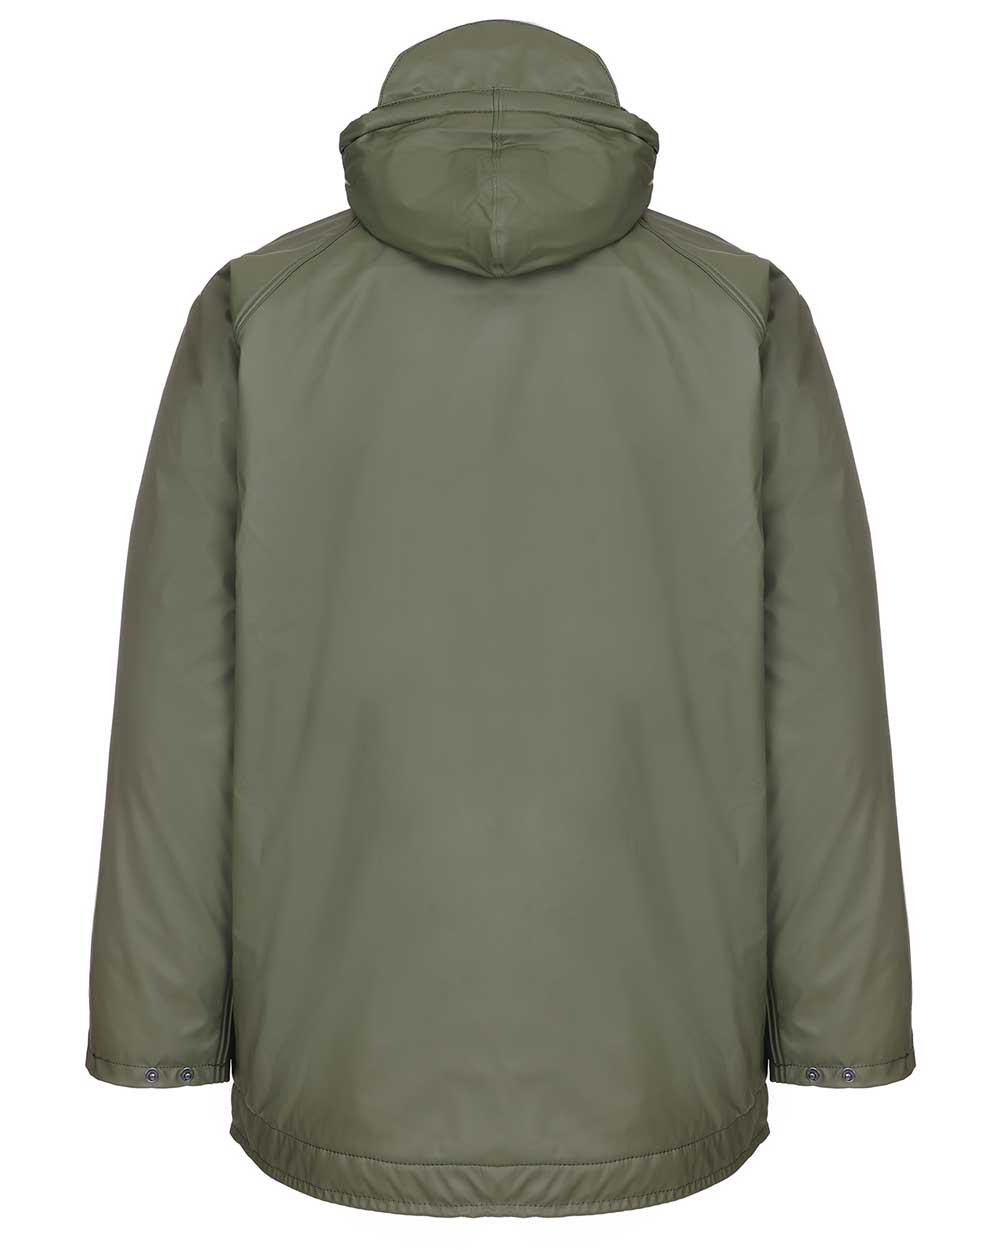 Back view FLEX Fleece Lined waterproof jacket GREEN Fortexfleece 219 